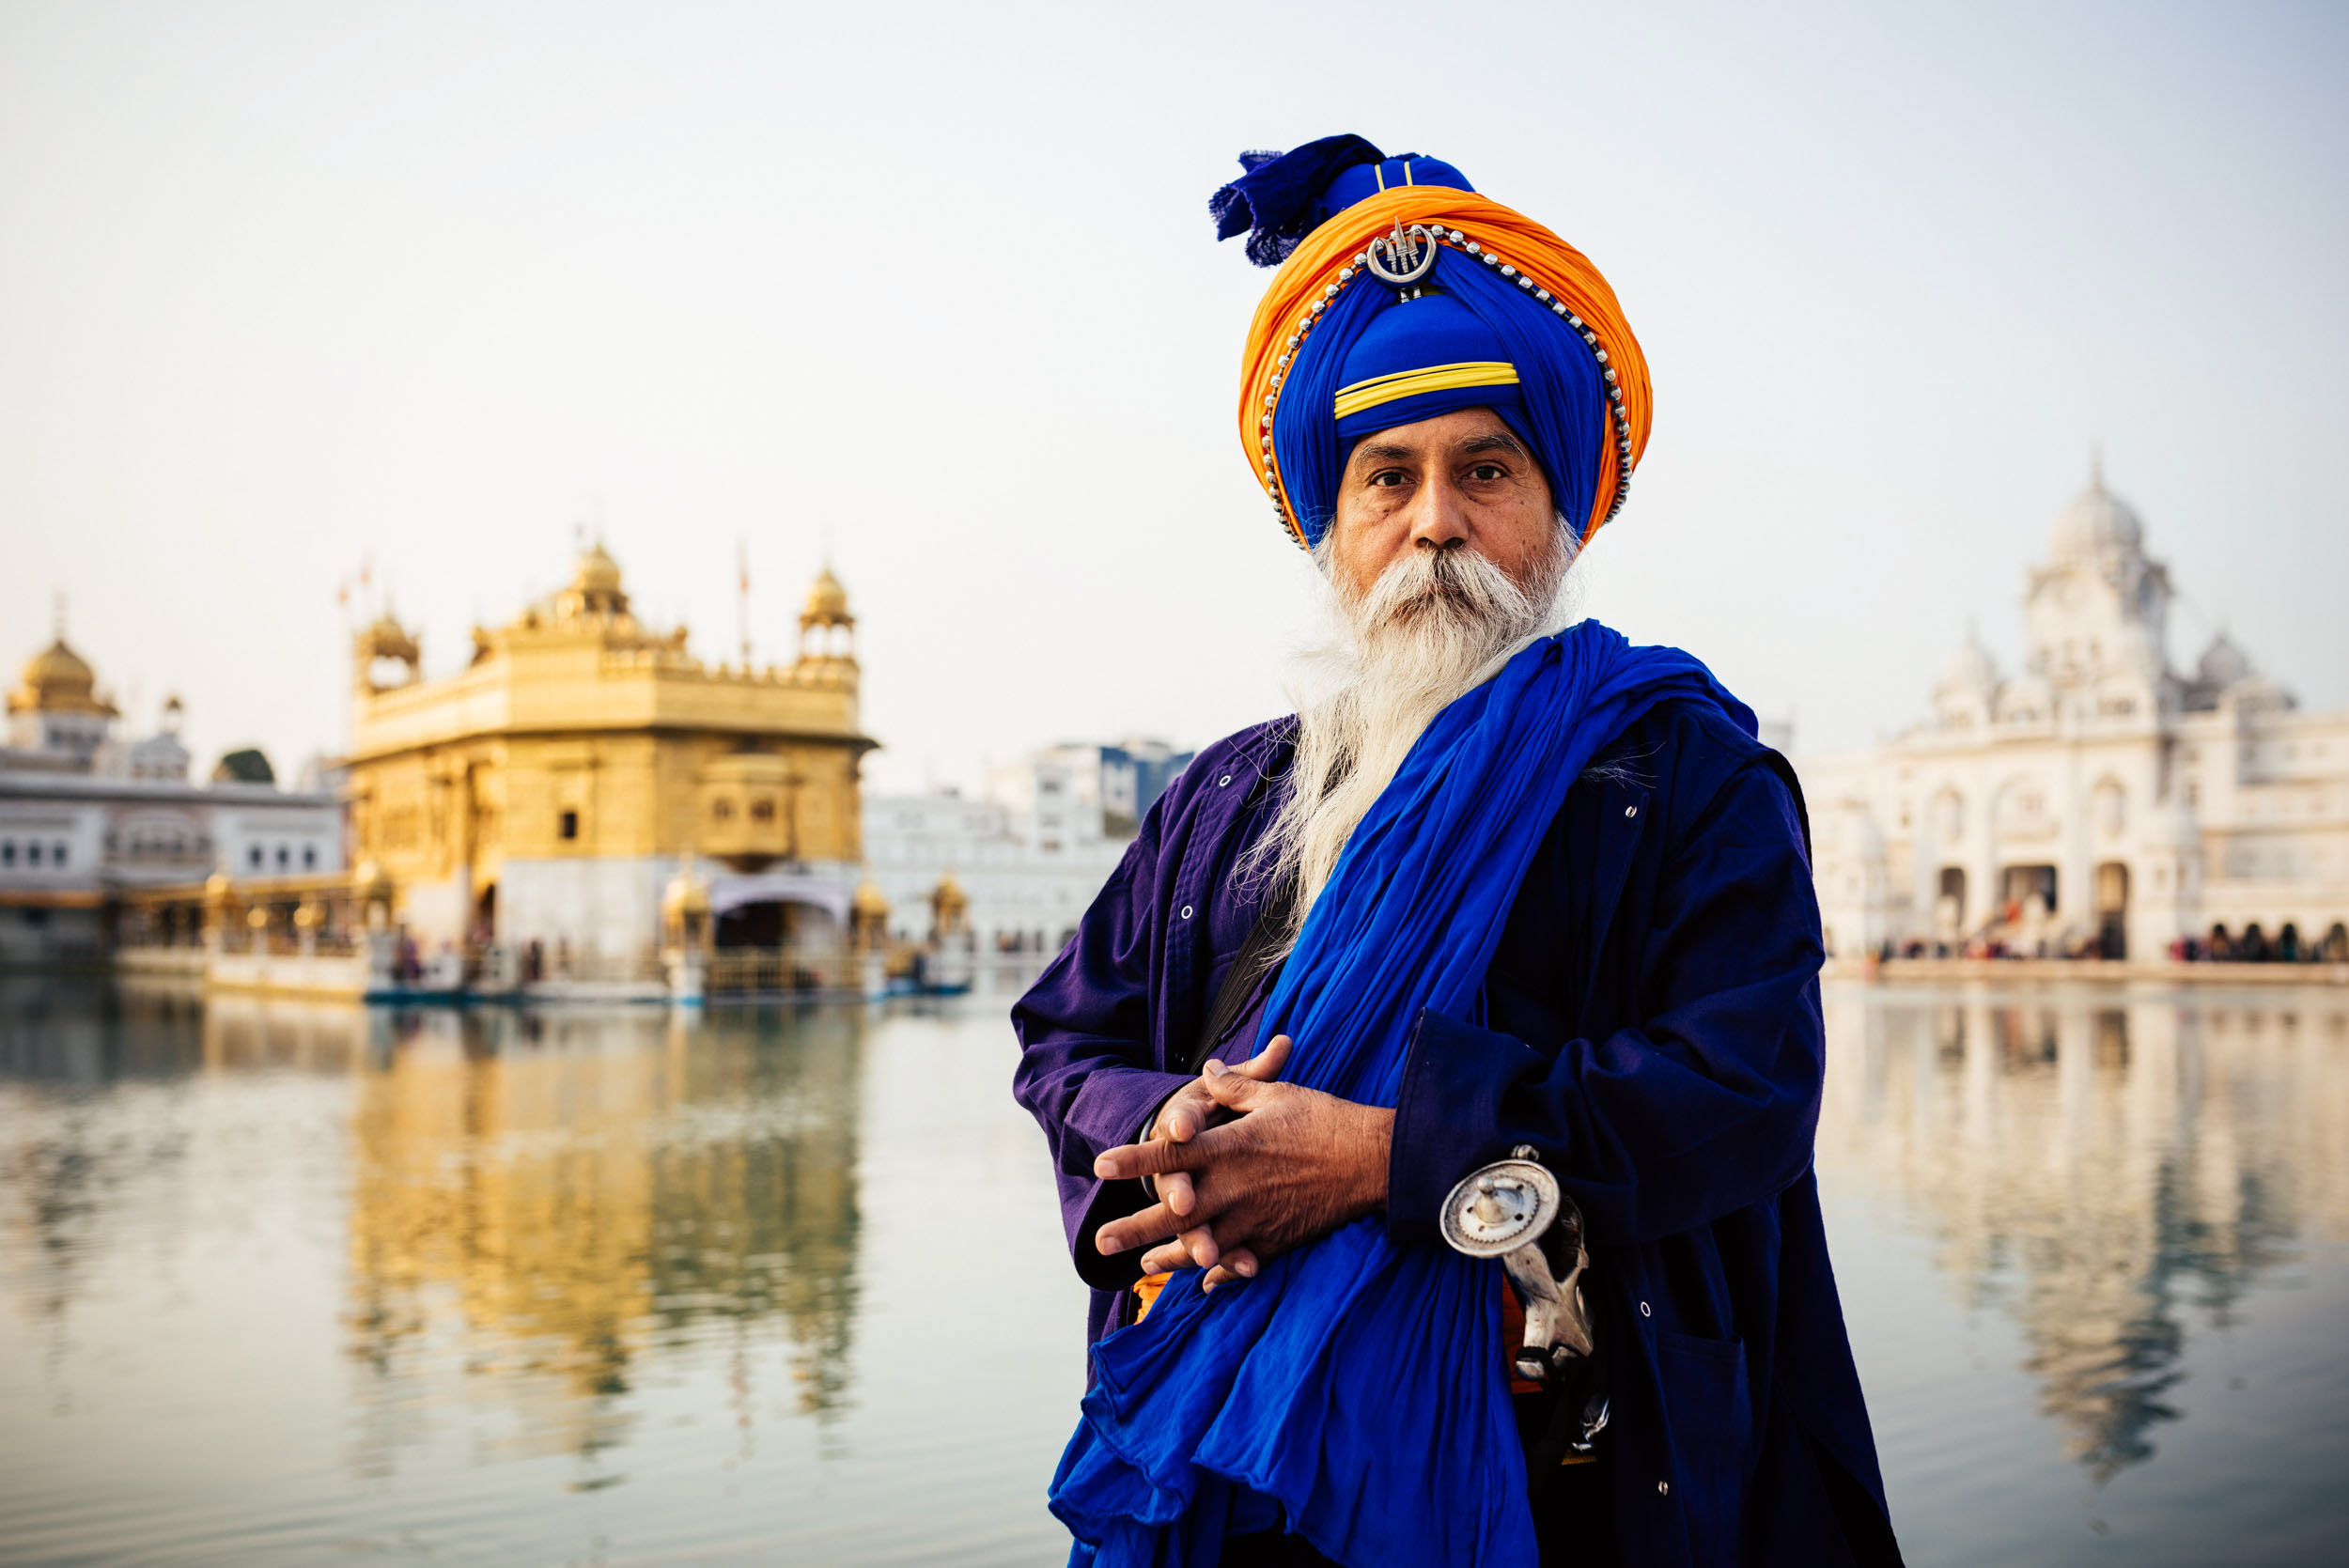 guard-man-amritsar-punjab-india-travel-photographer-of-the-year